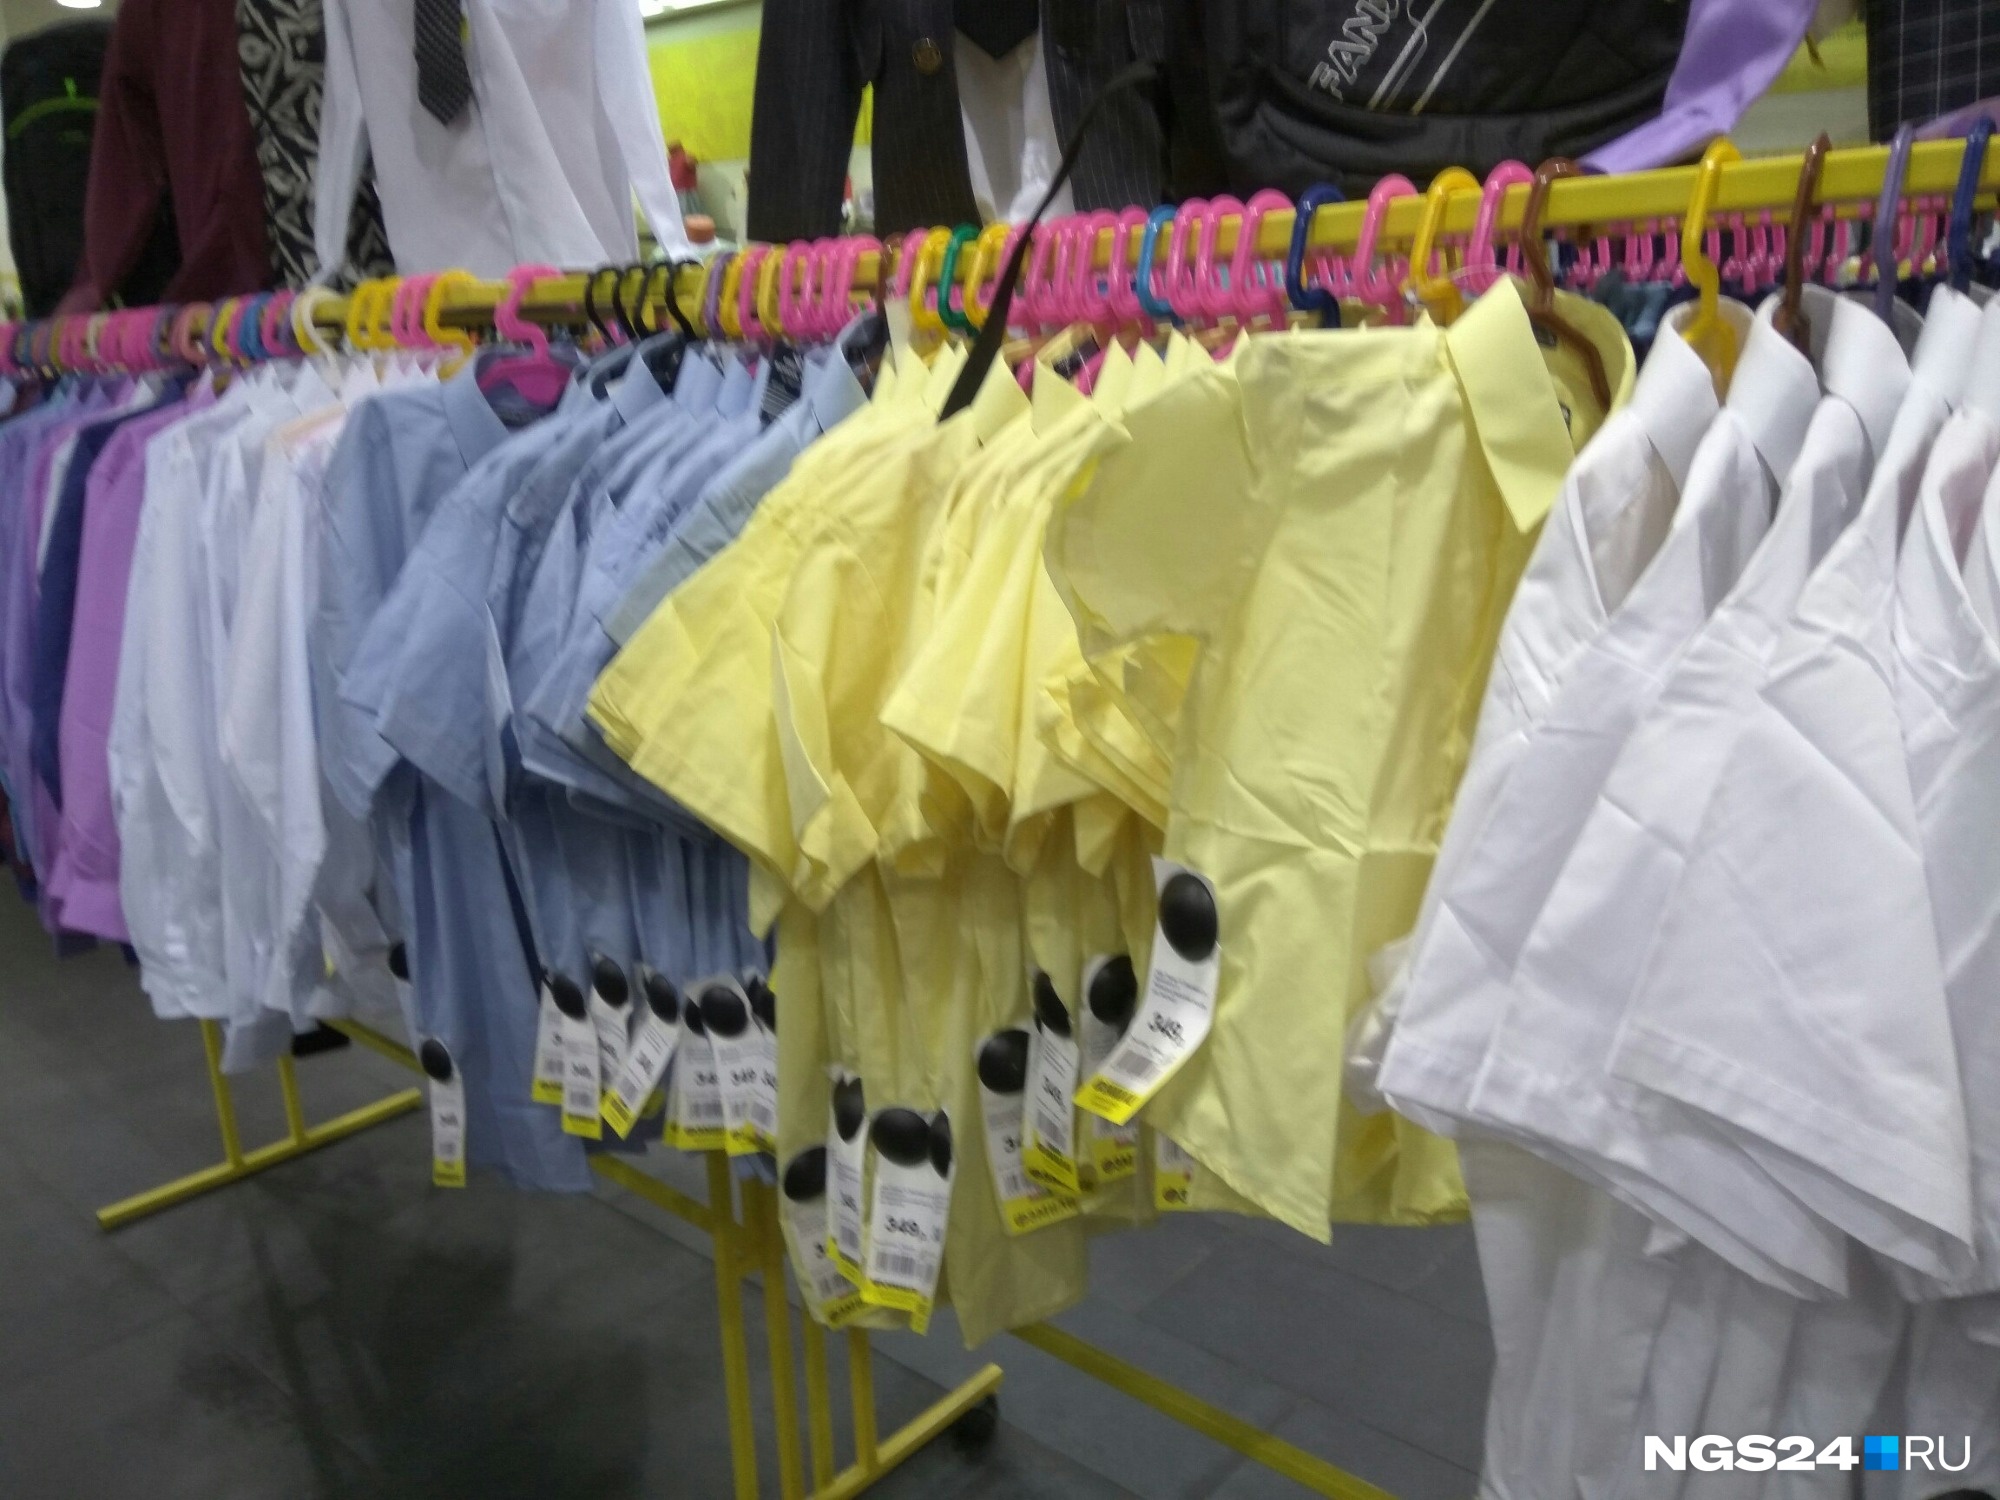 Рубашки в магазинах стоят от 200 рублей